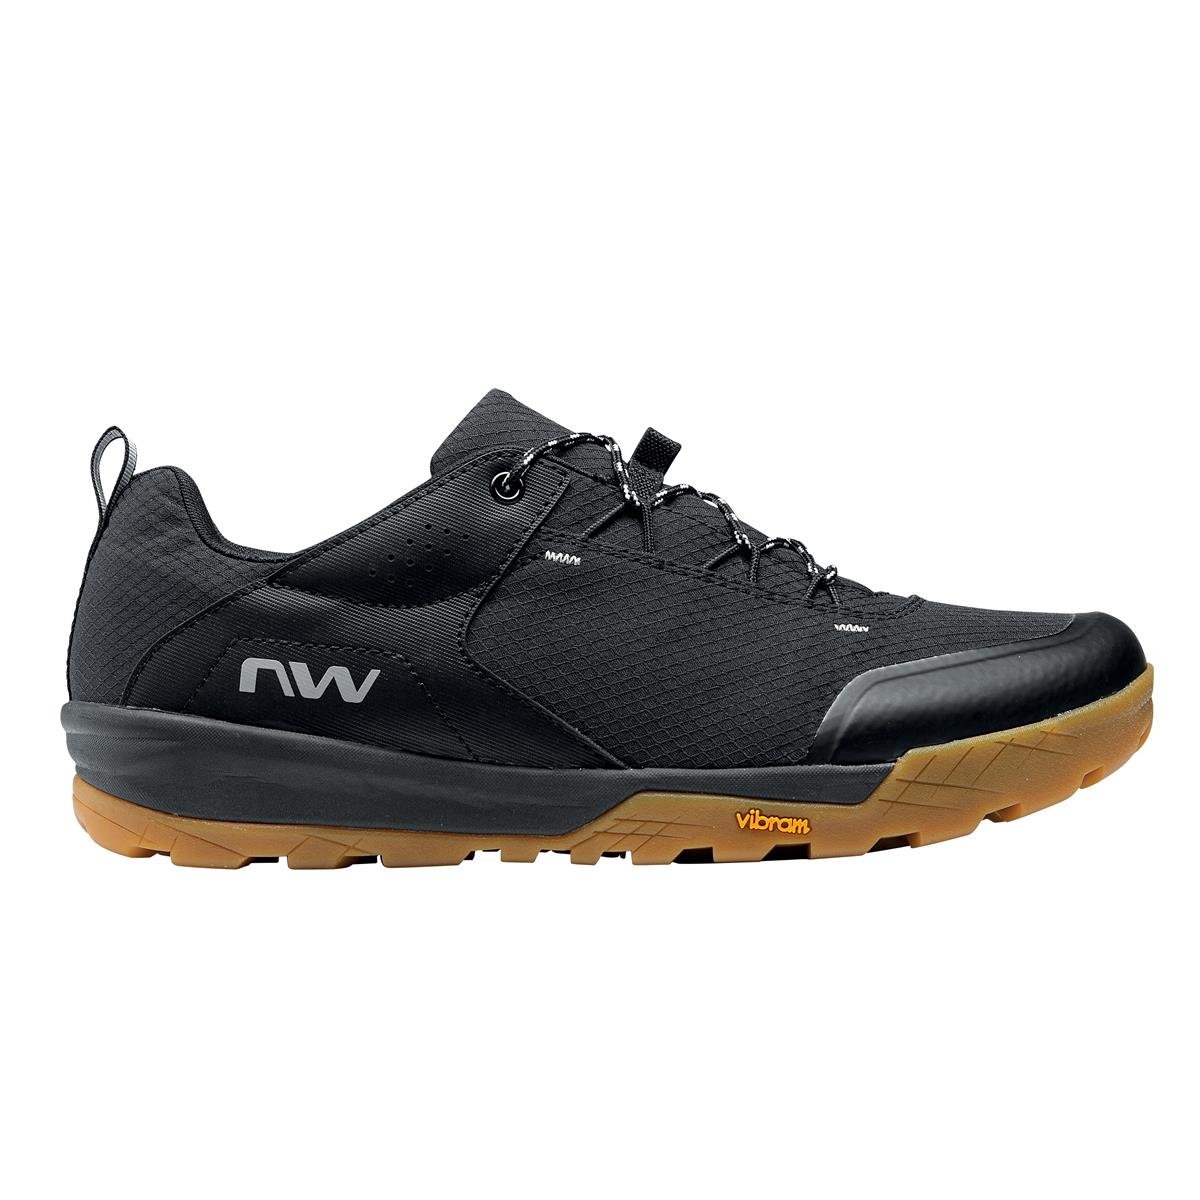 Northwave Chaussures VTT Rockit Noir